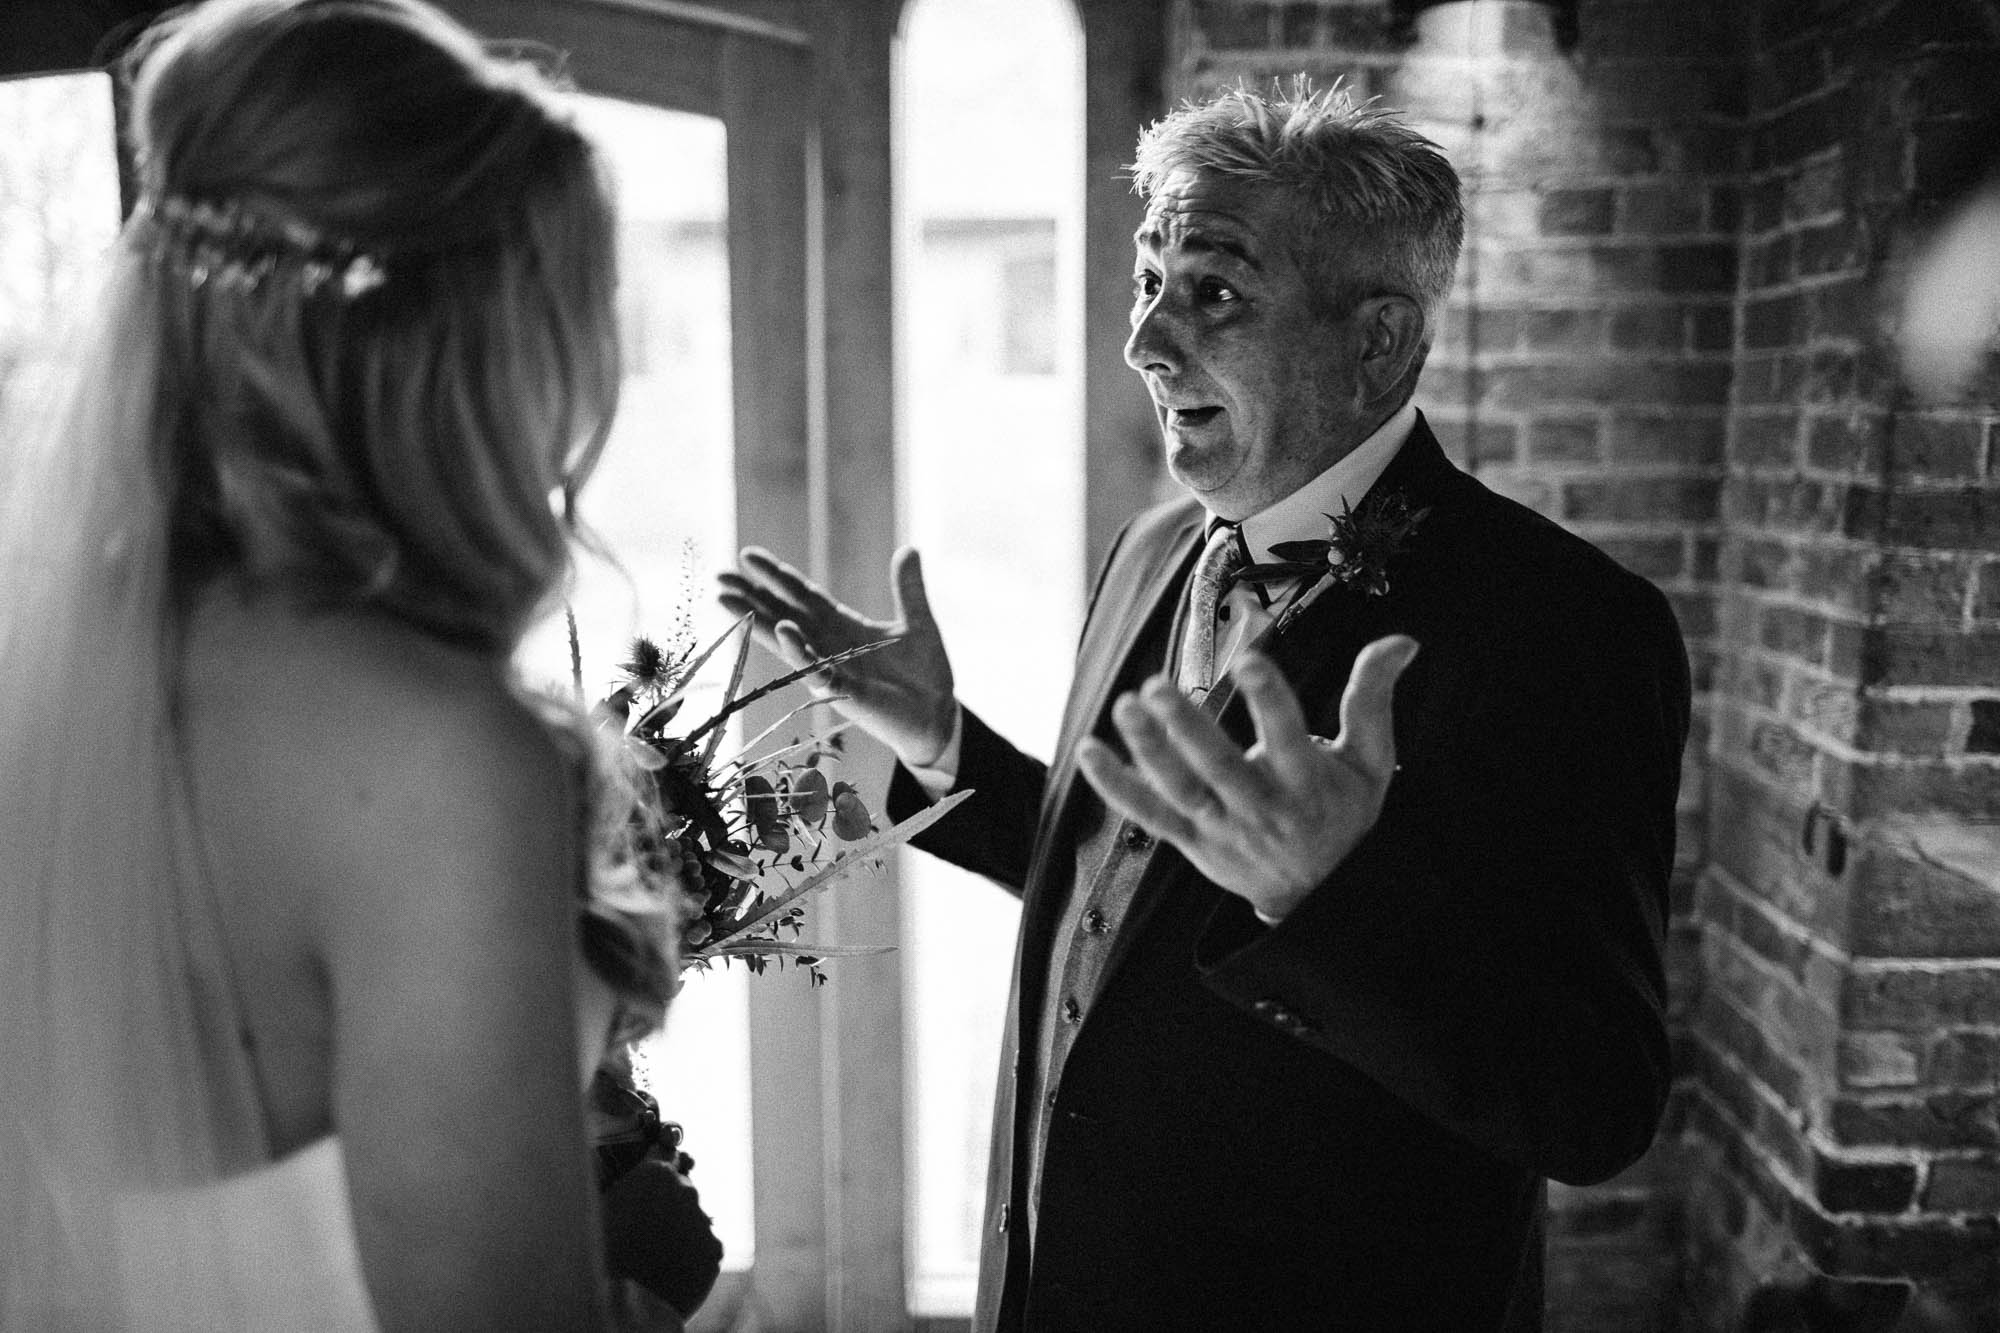 Father of bride shows his joy to Bride after wedding